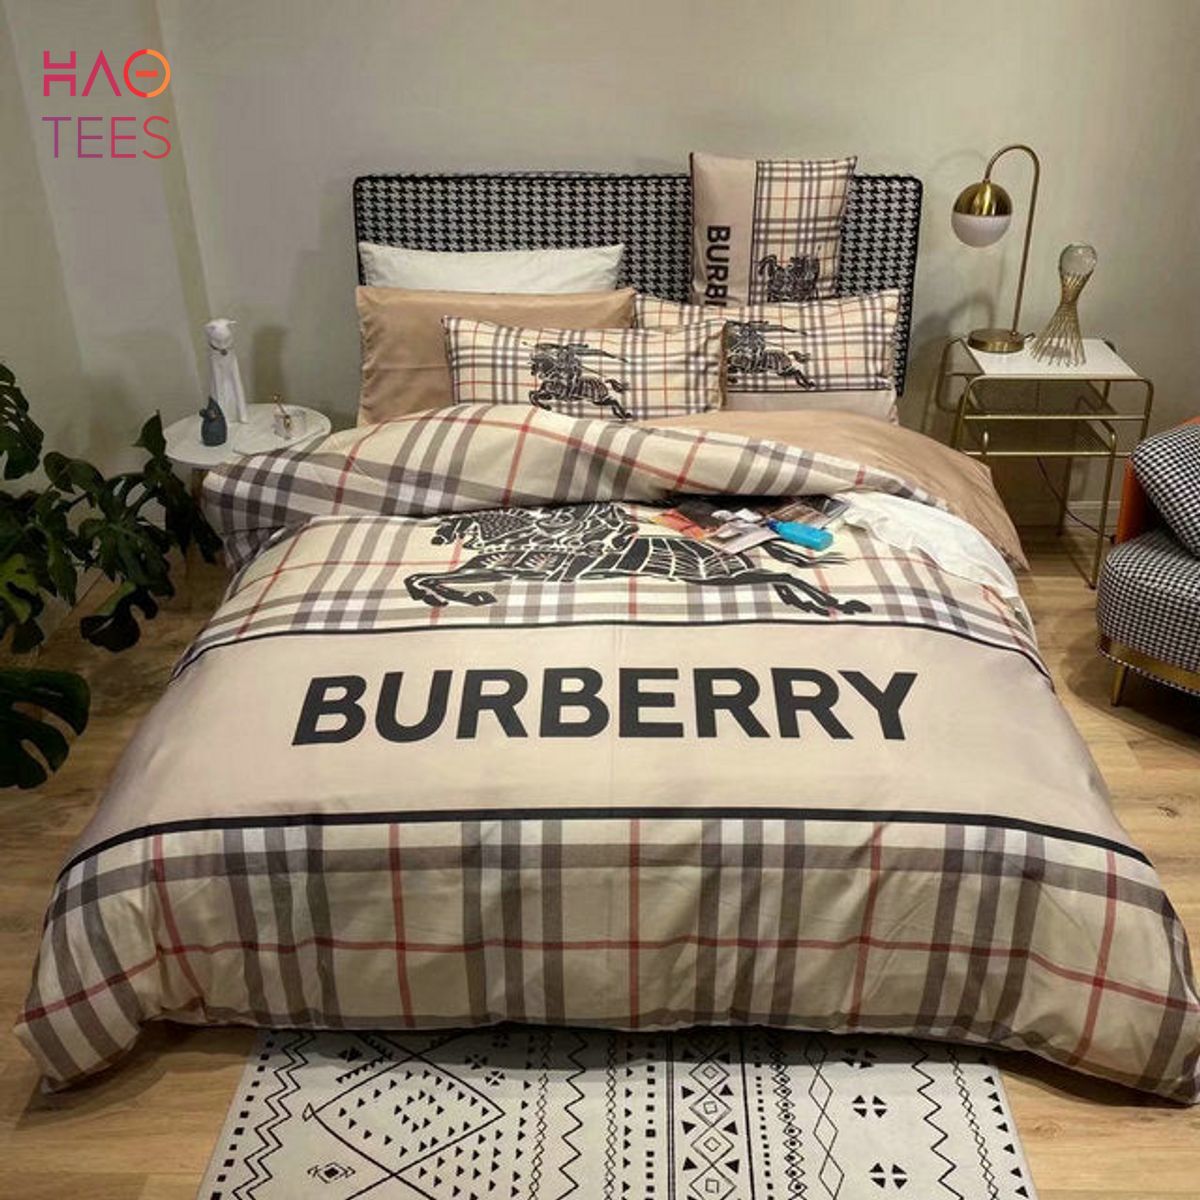 Burberry Bedding Set